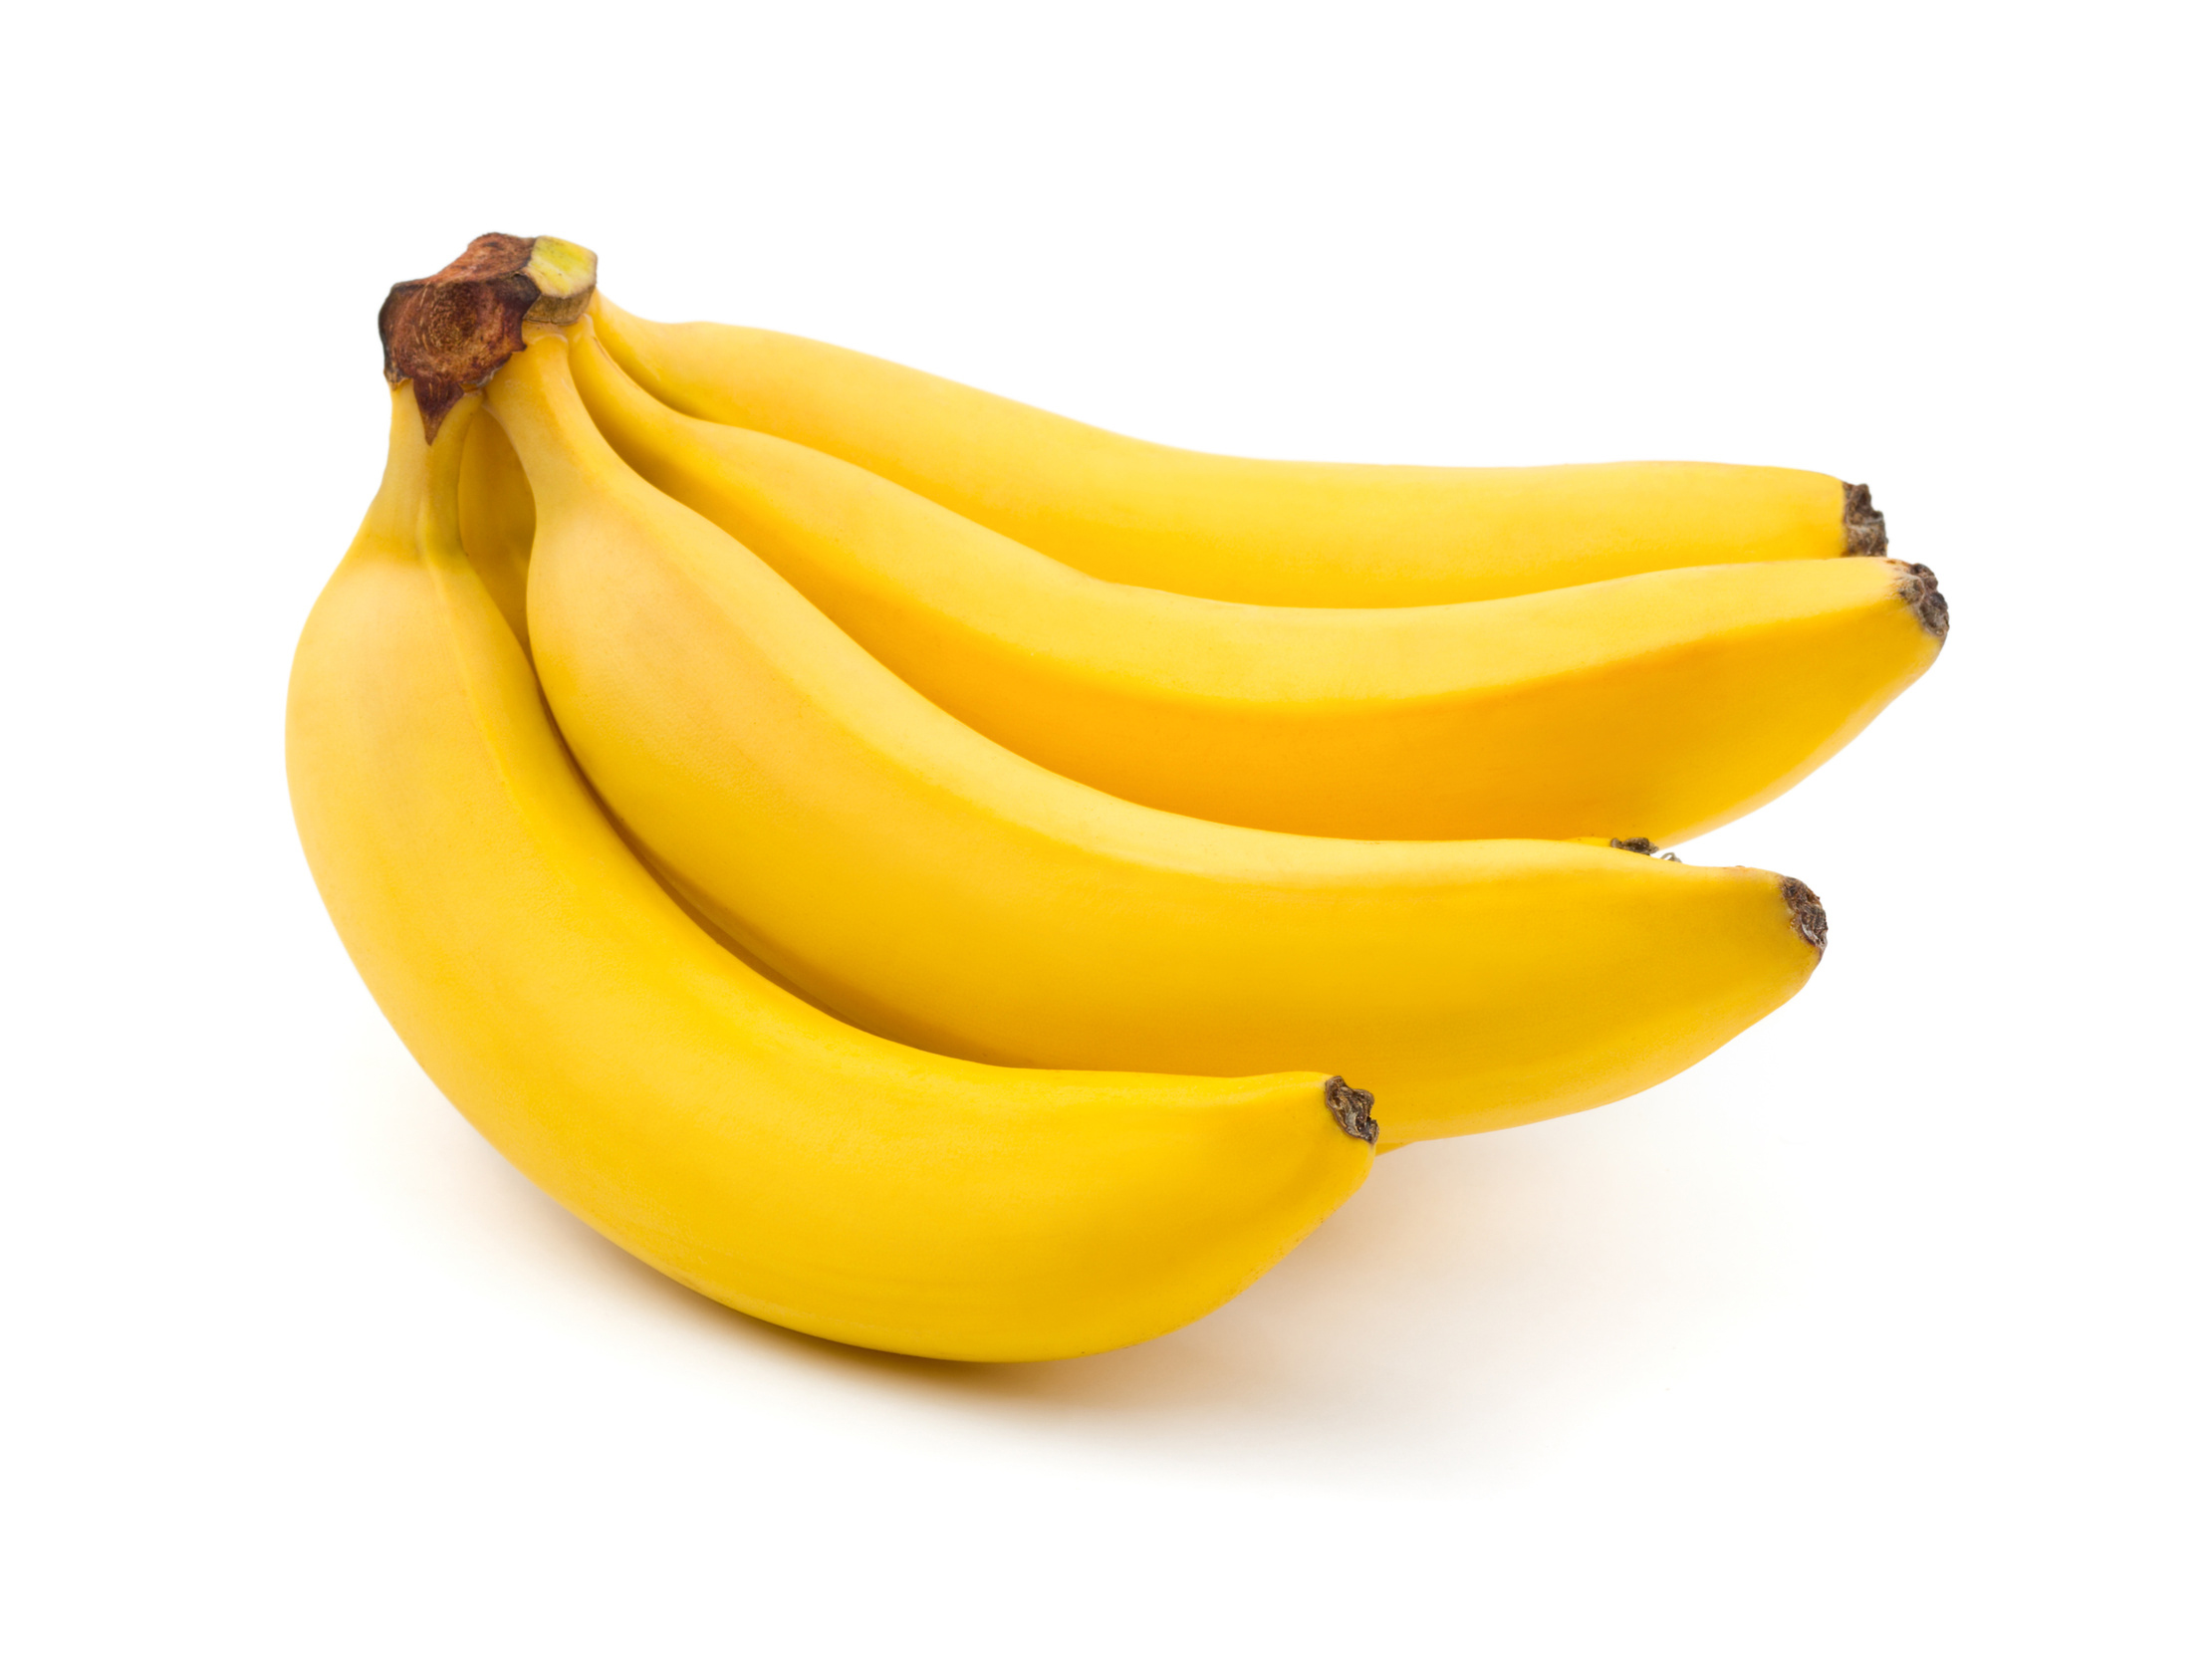 5 Benefits of Eating Bananas